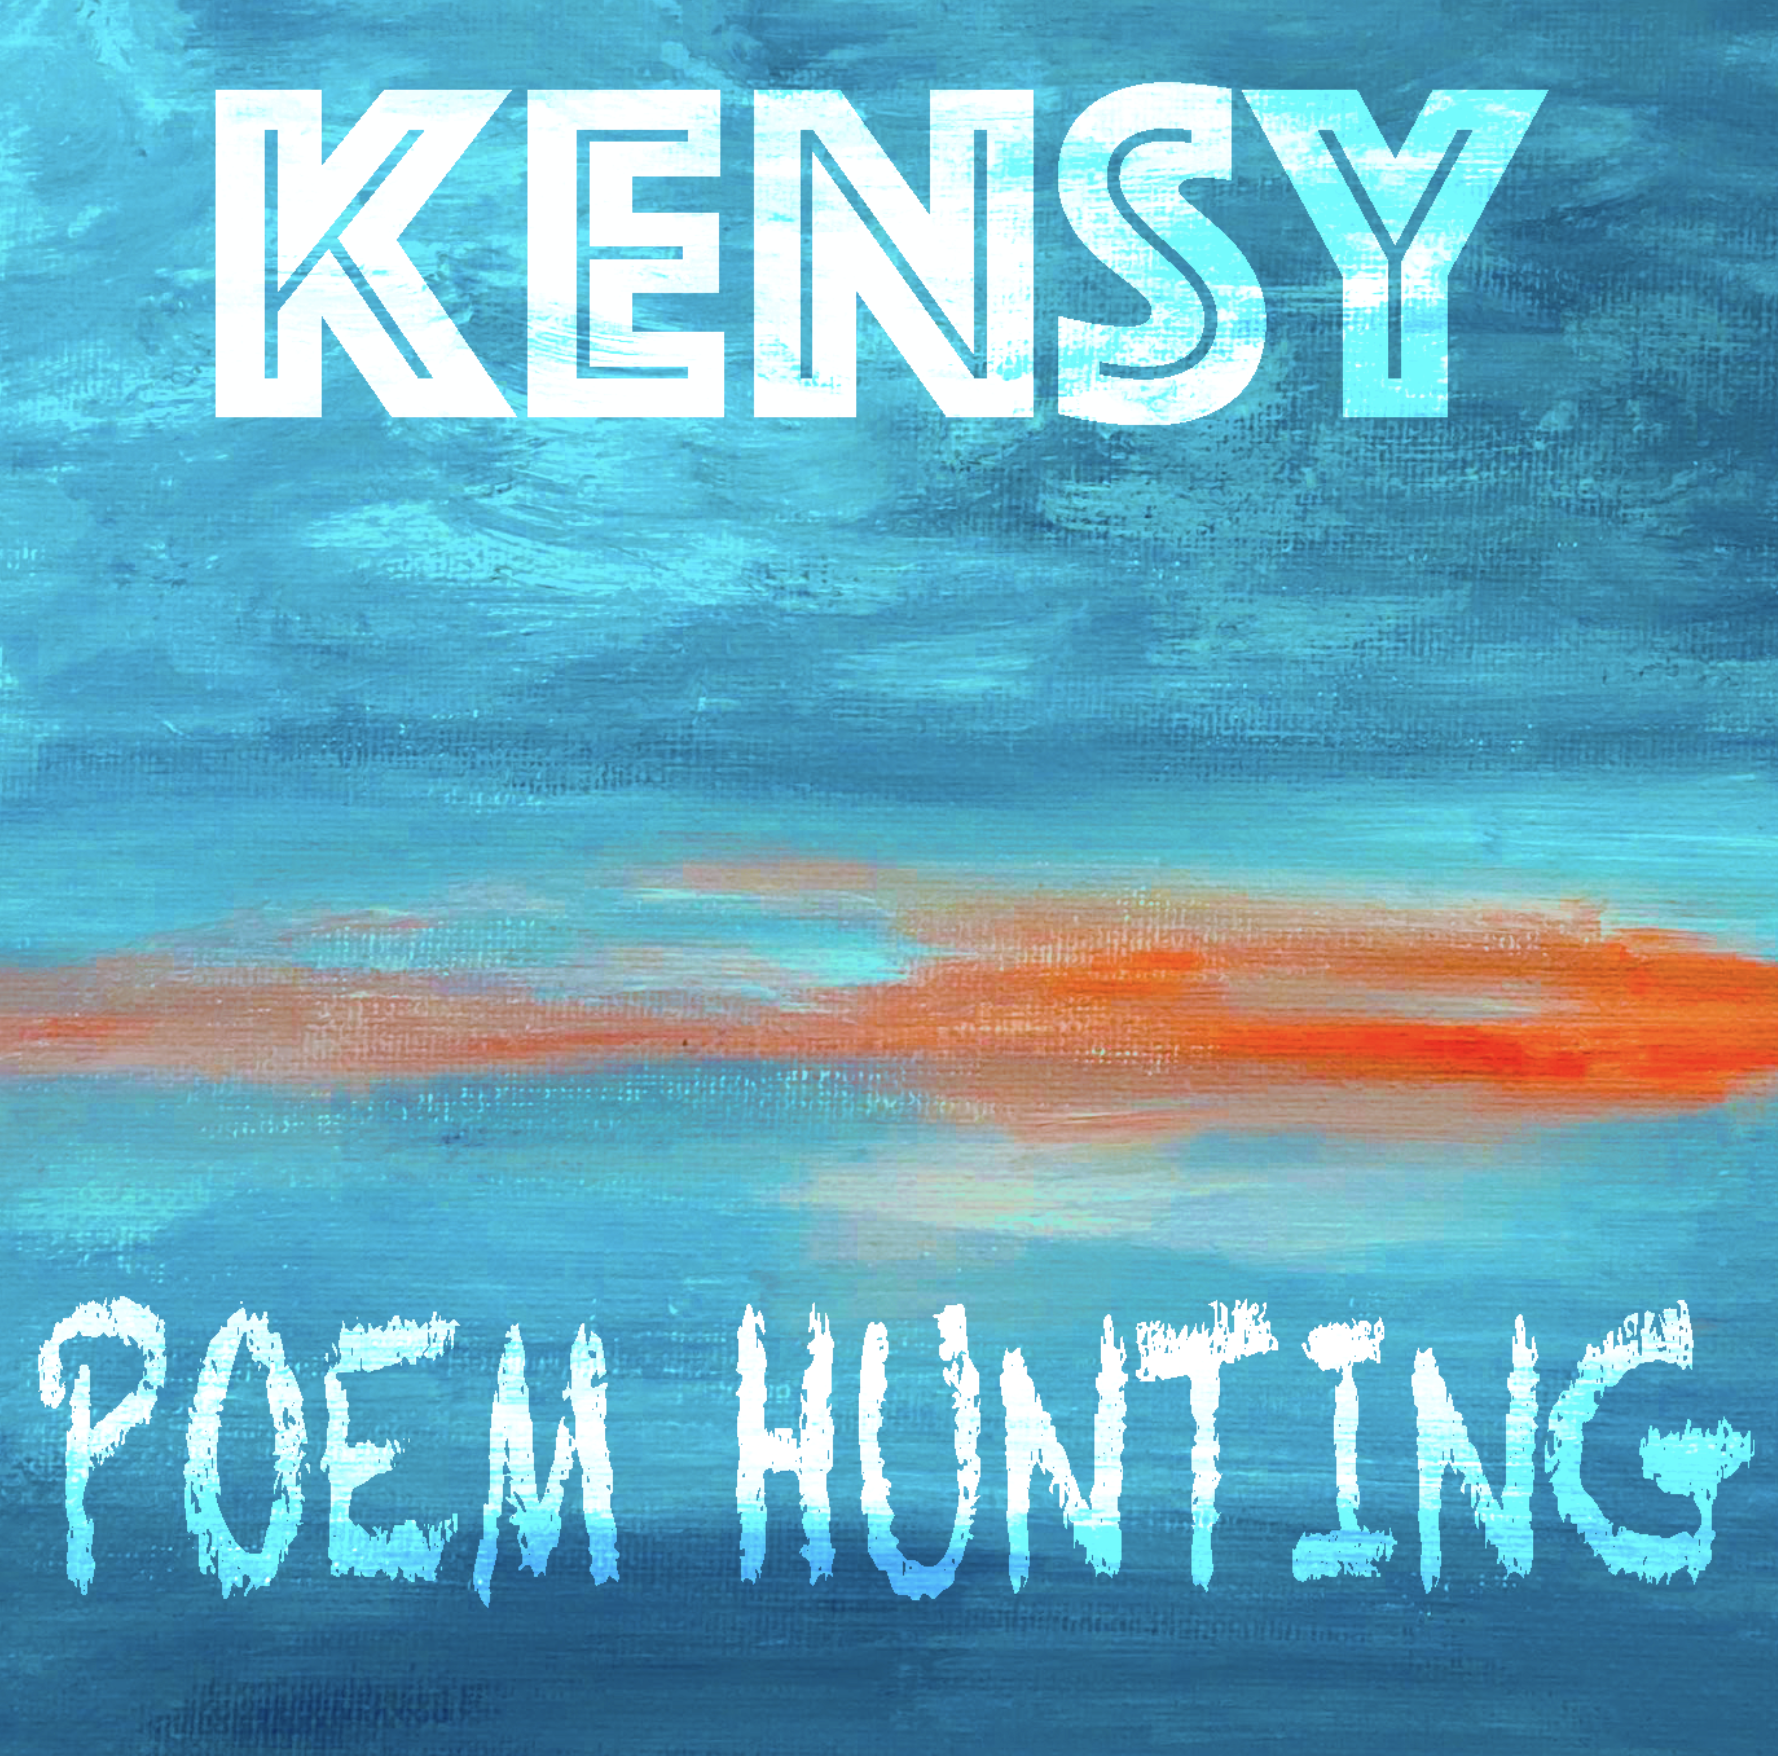 KENSY Poem Hunting